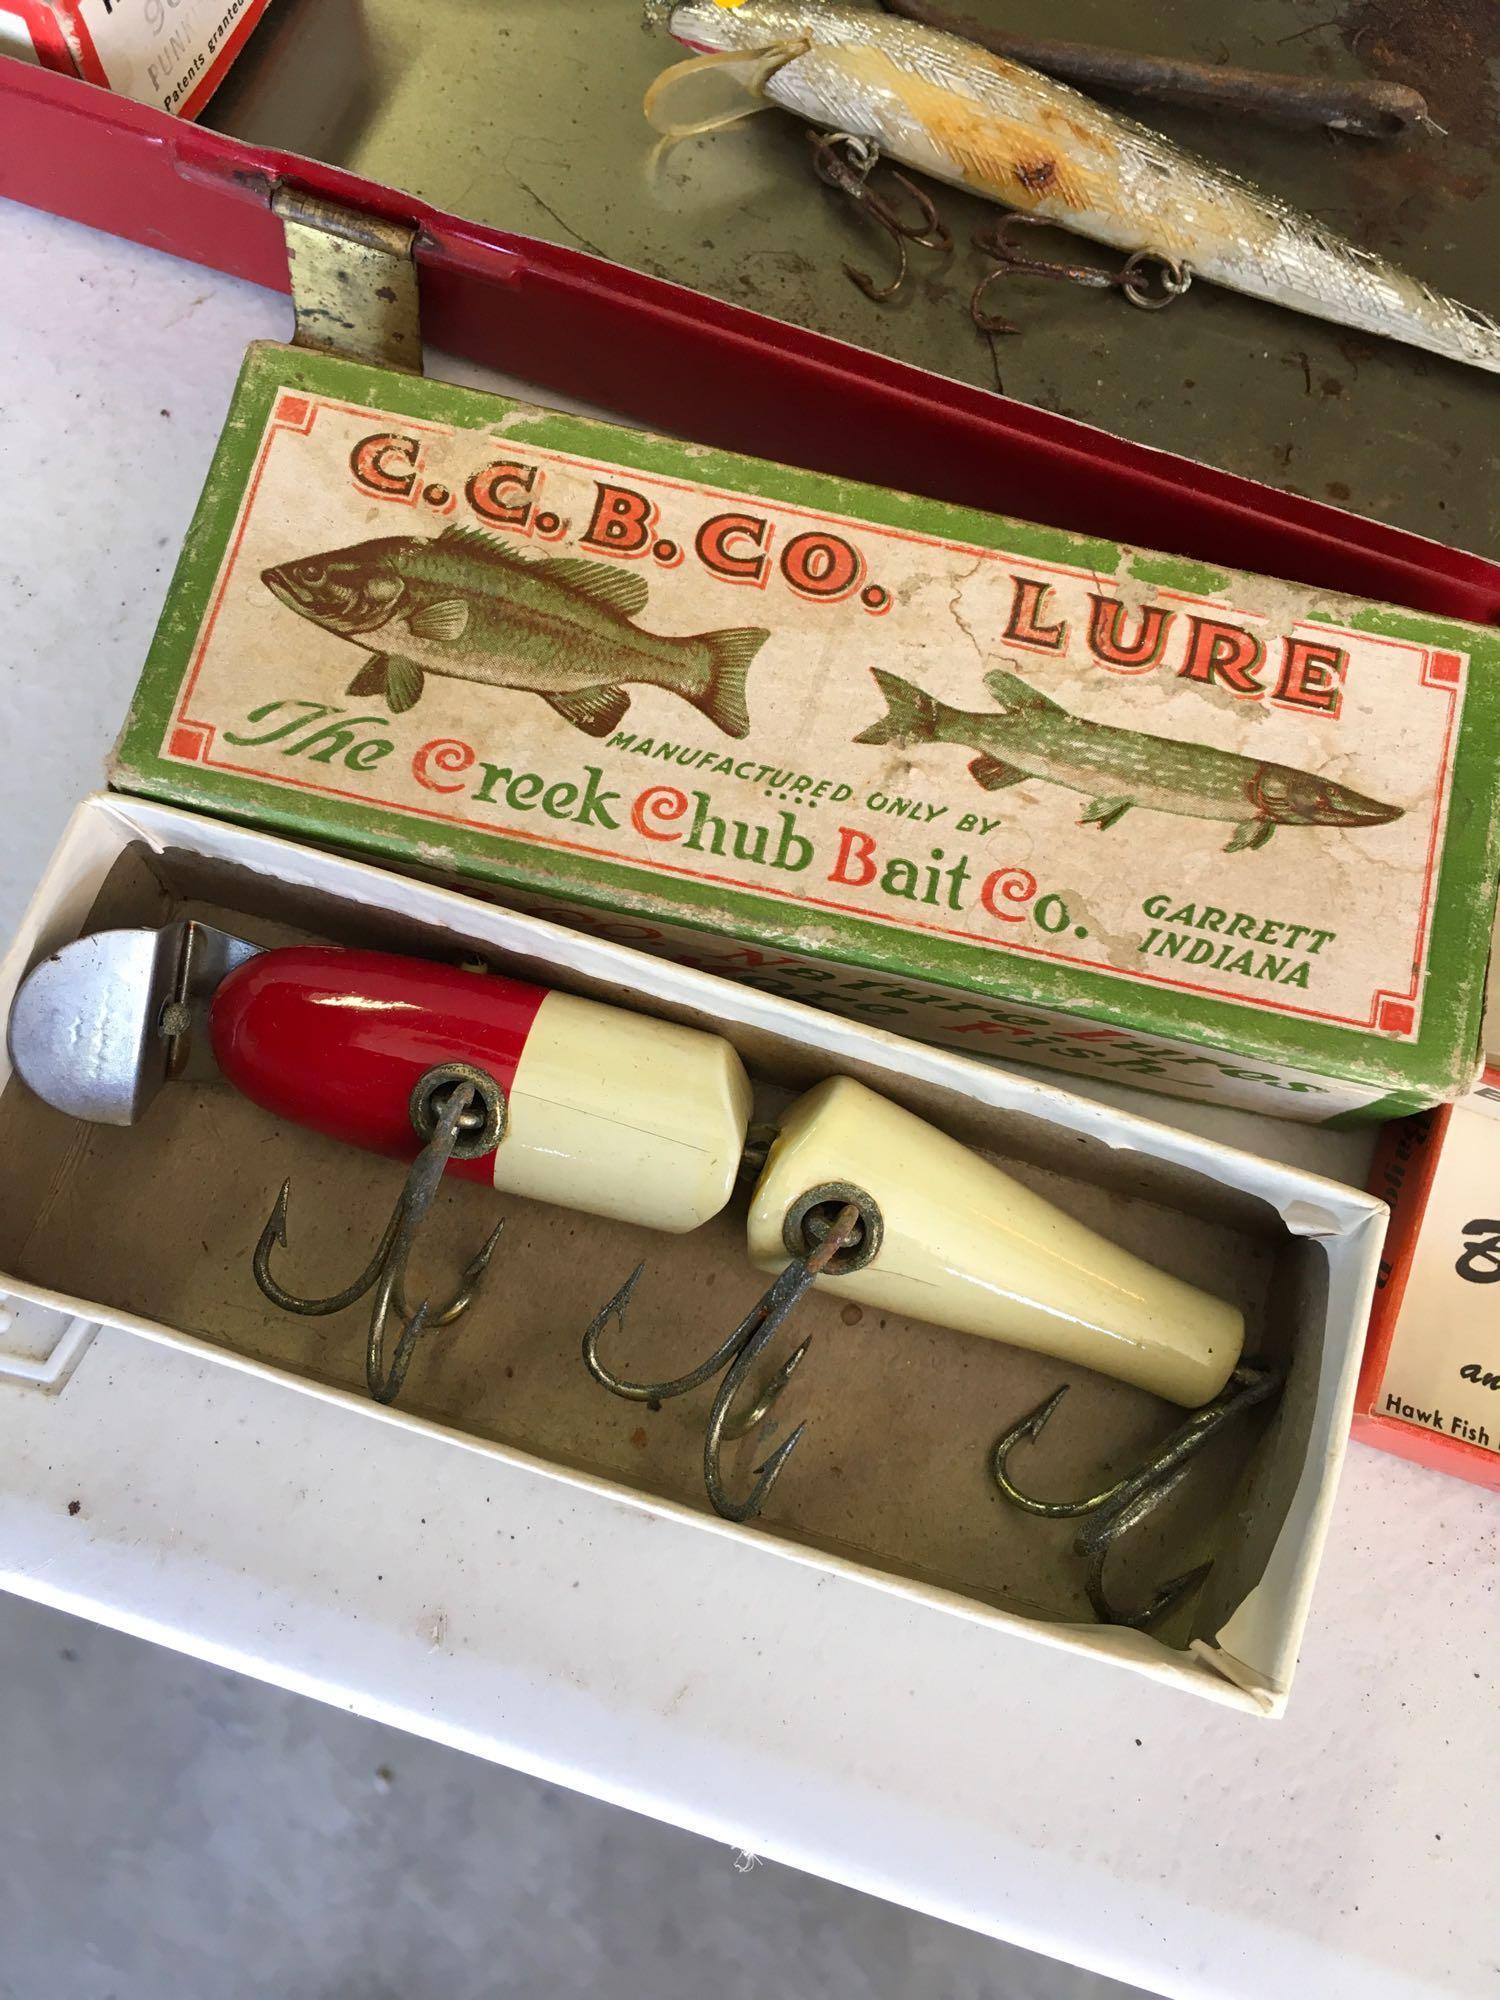 Vintage bait. Some in original boxes